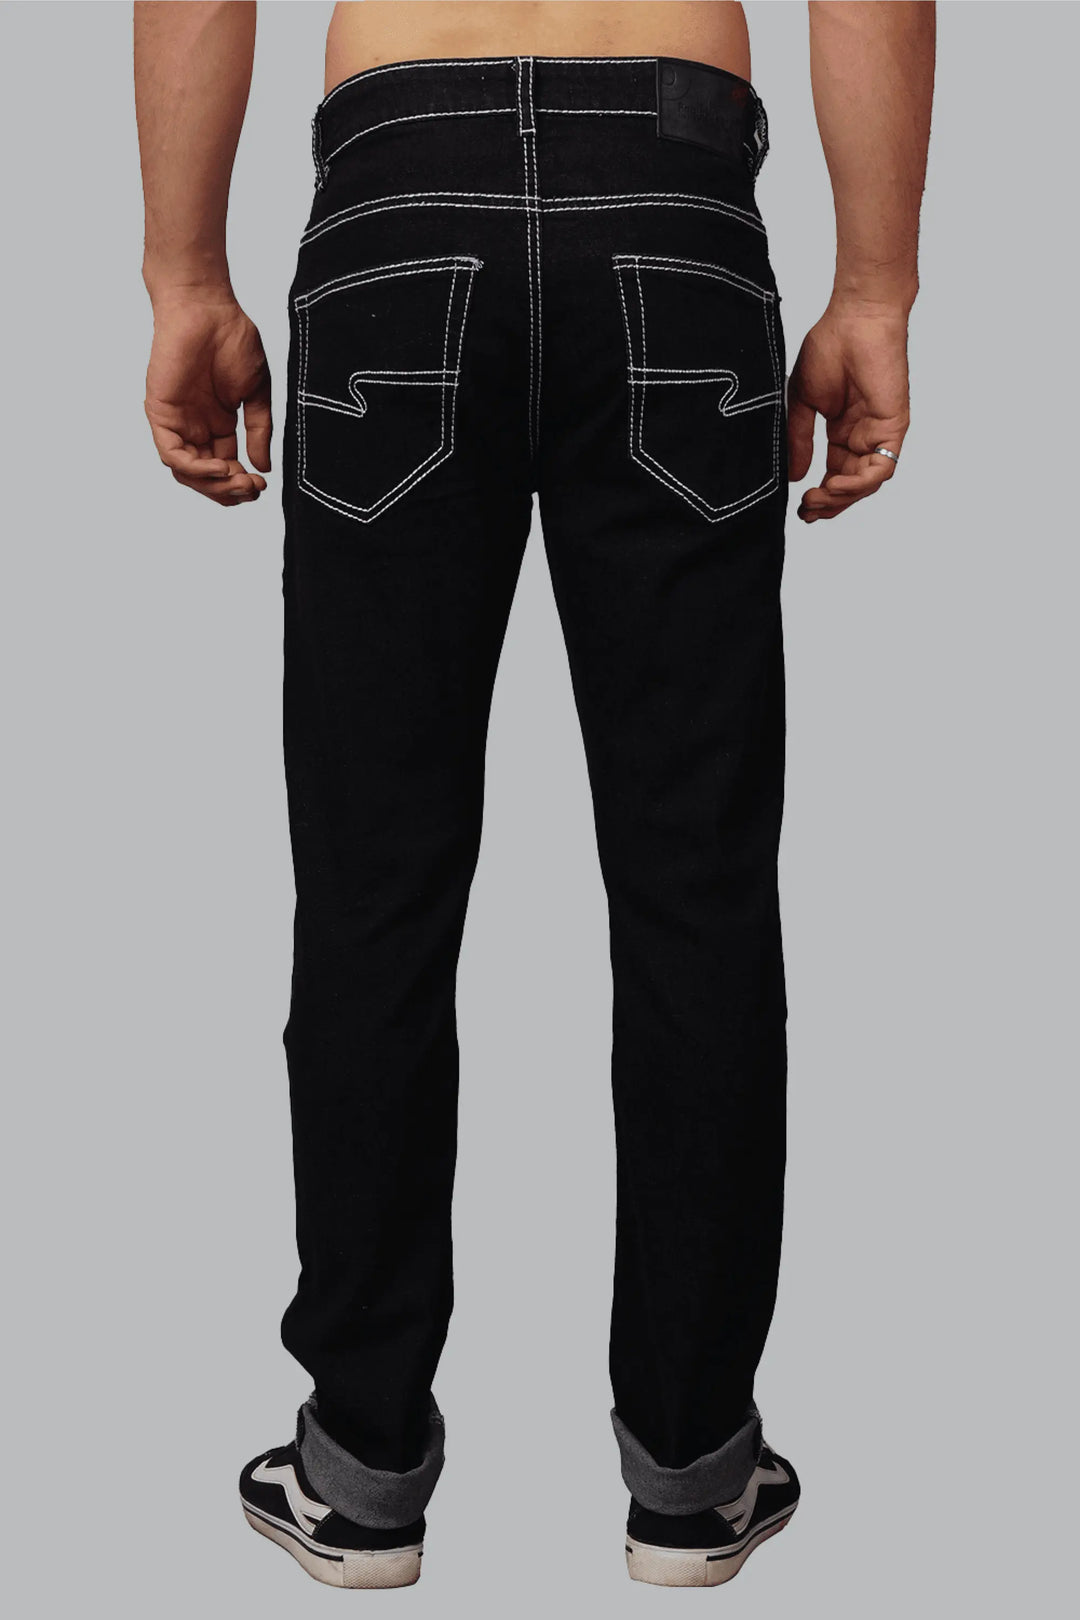 Slim Fit Shine Black Premium Denim Jeans For Men - Peplos Jeans 